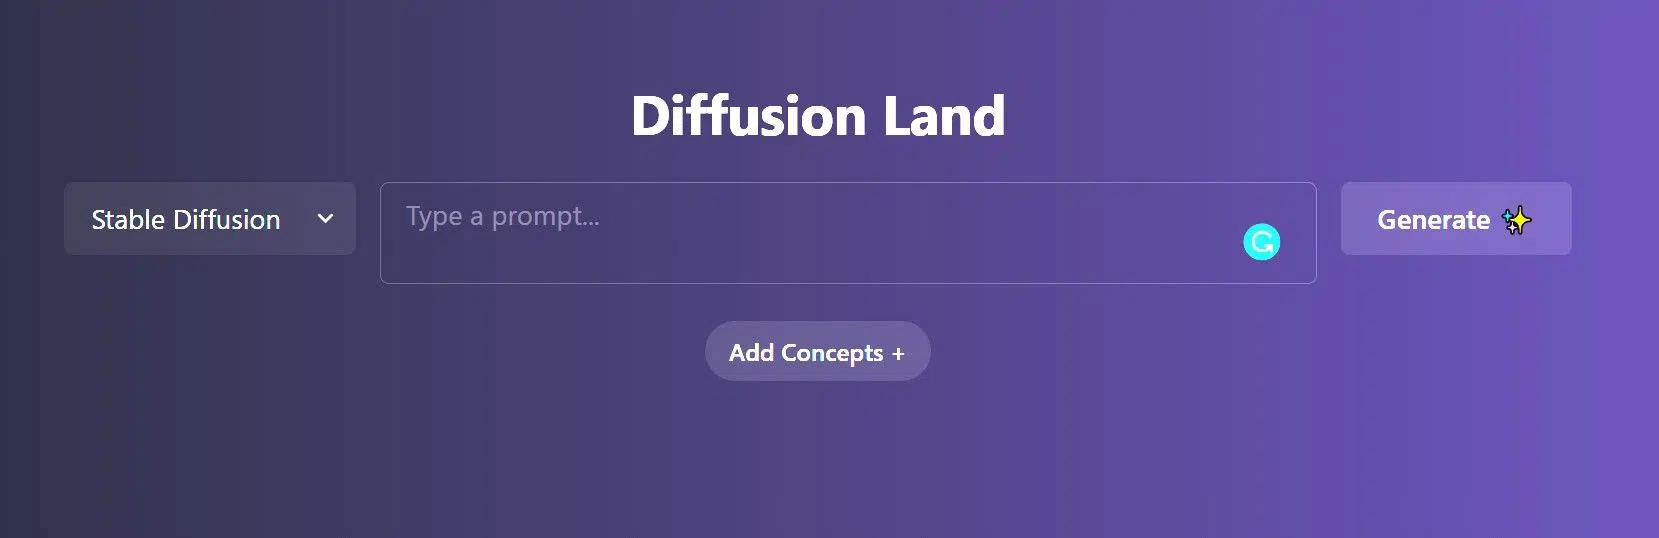 Diffusion Landwebsite picture